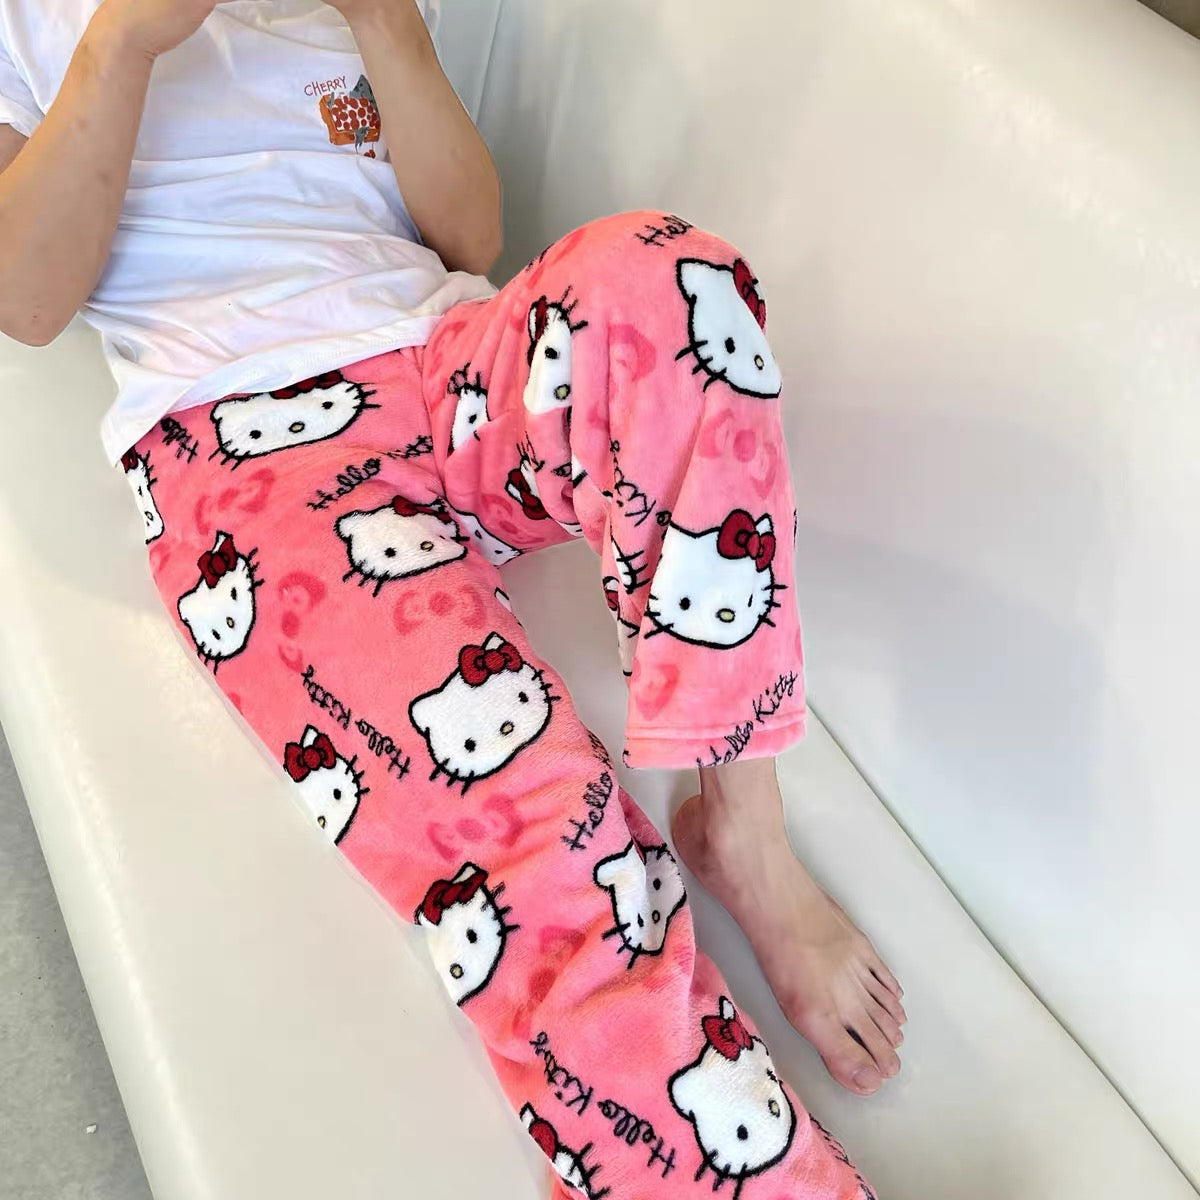 Pyjama hello kitty long rose - Boutique hello kitty